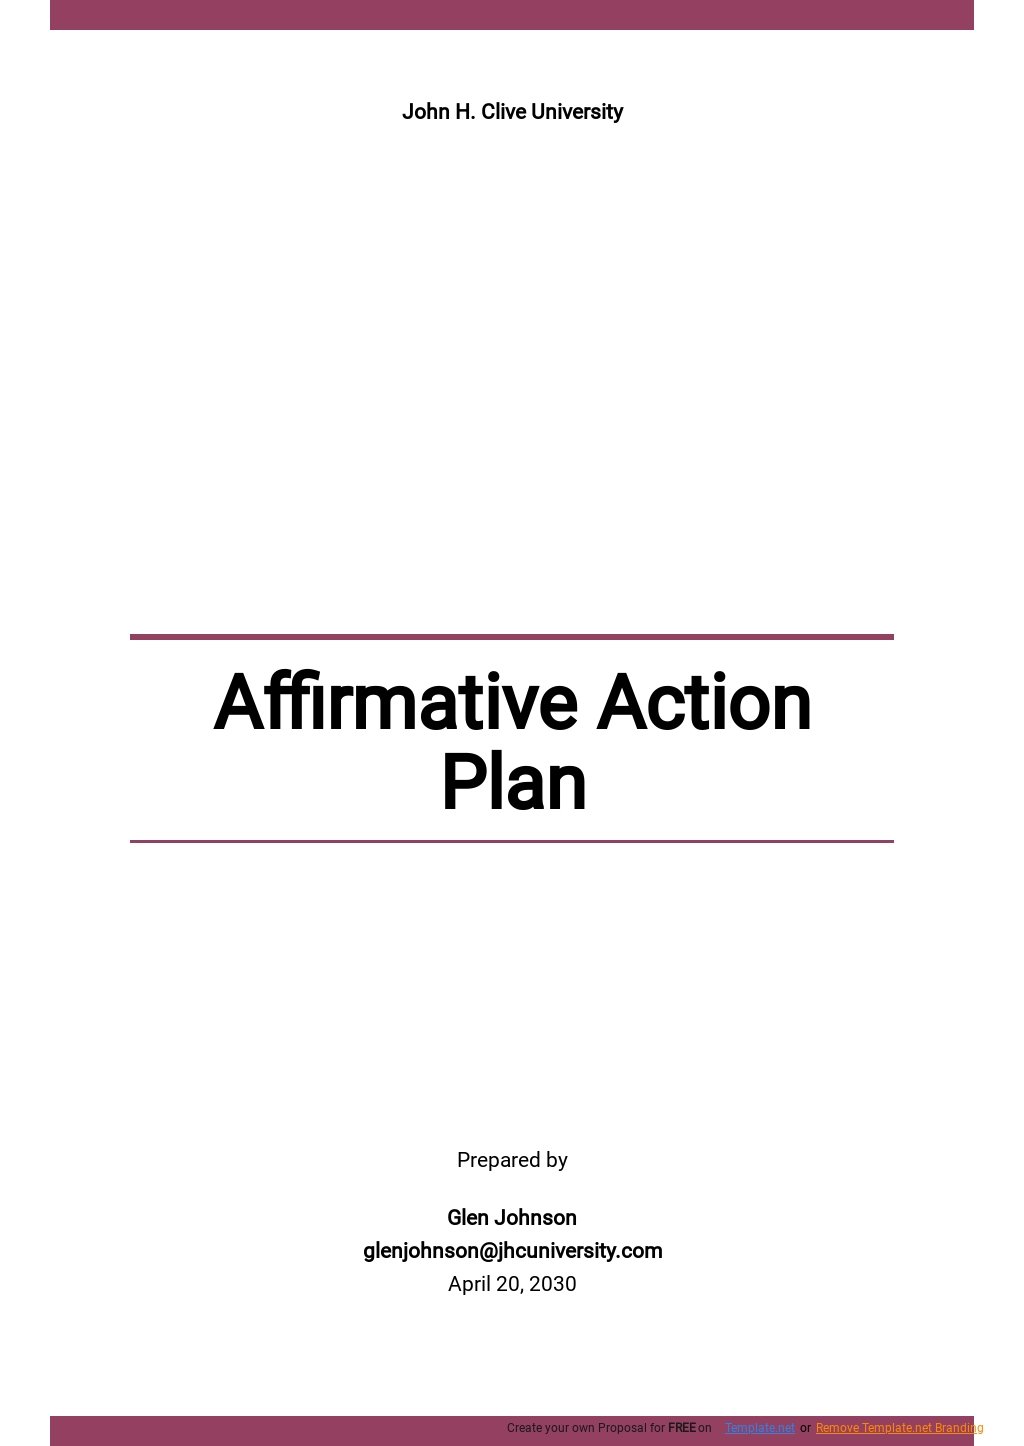 University Affirmative Action Plan Template